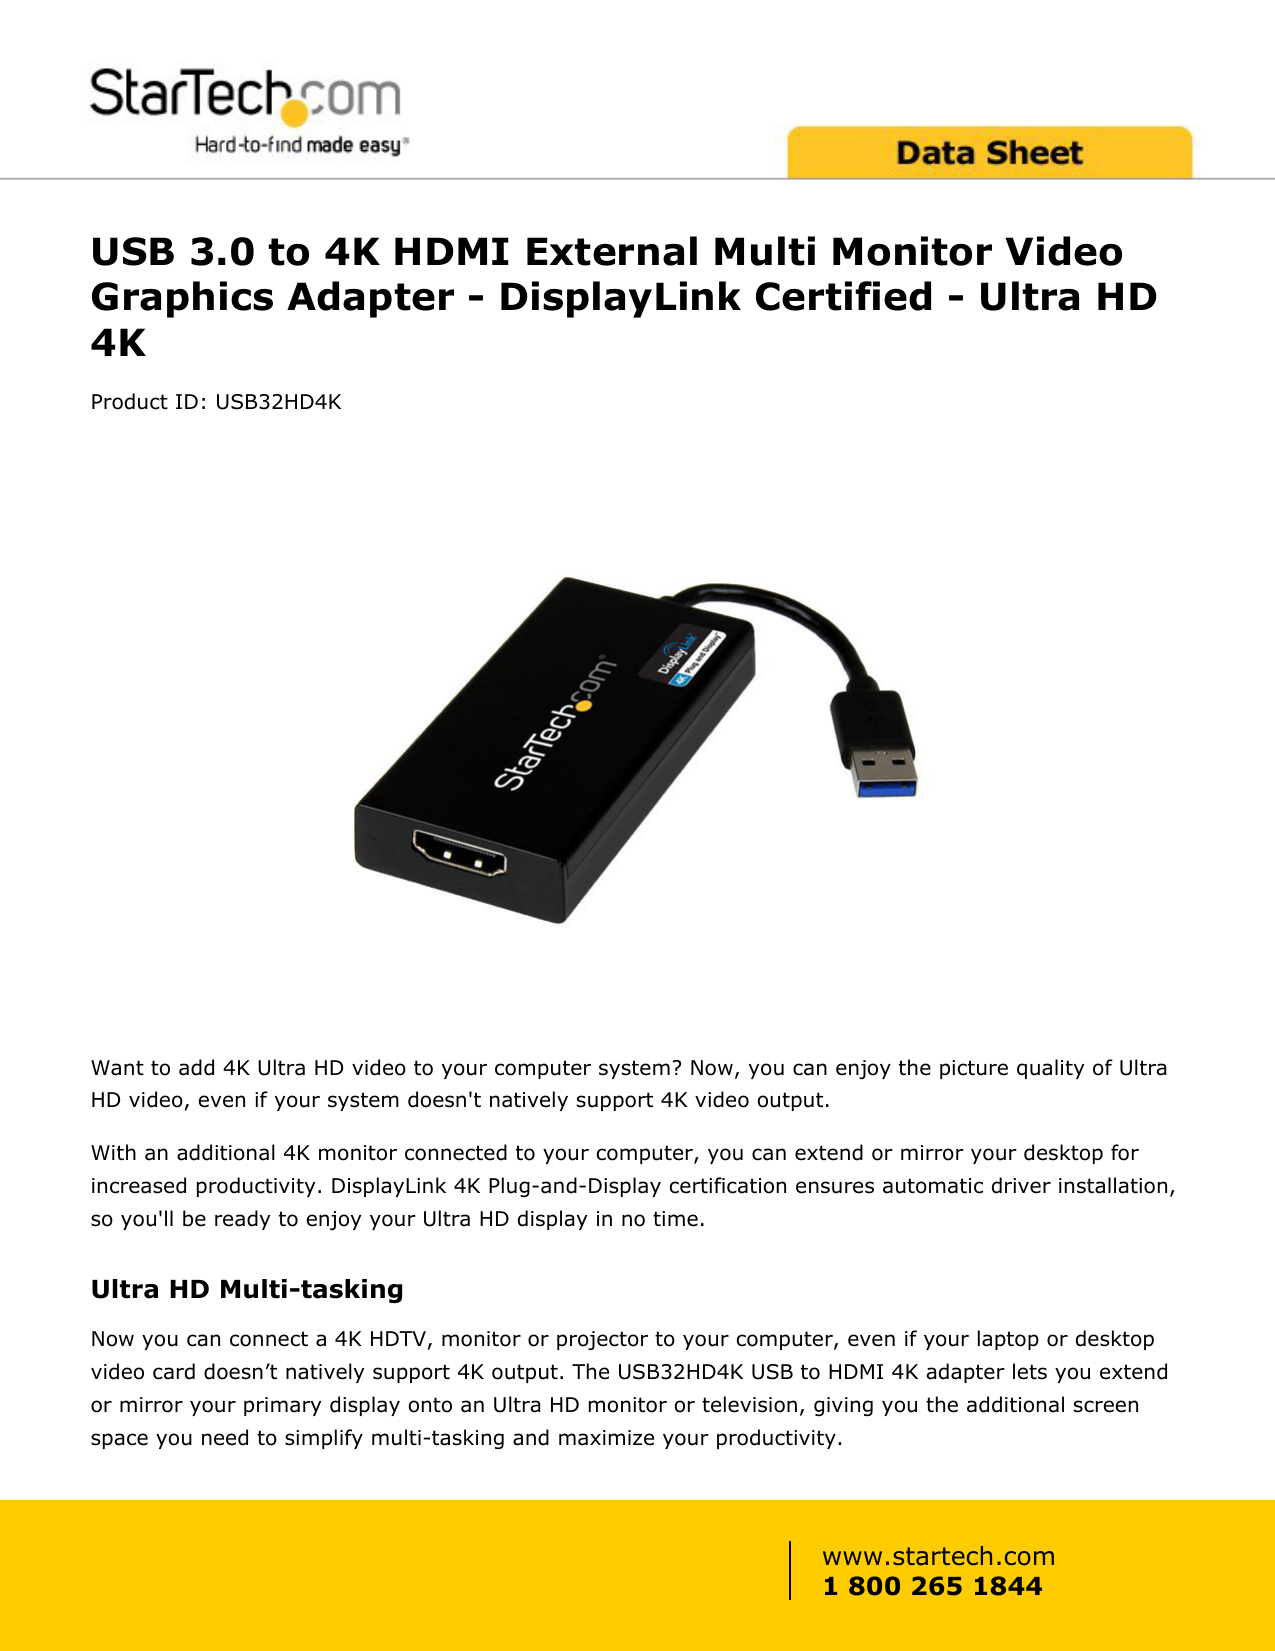 4k ultra hd video card